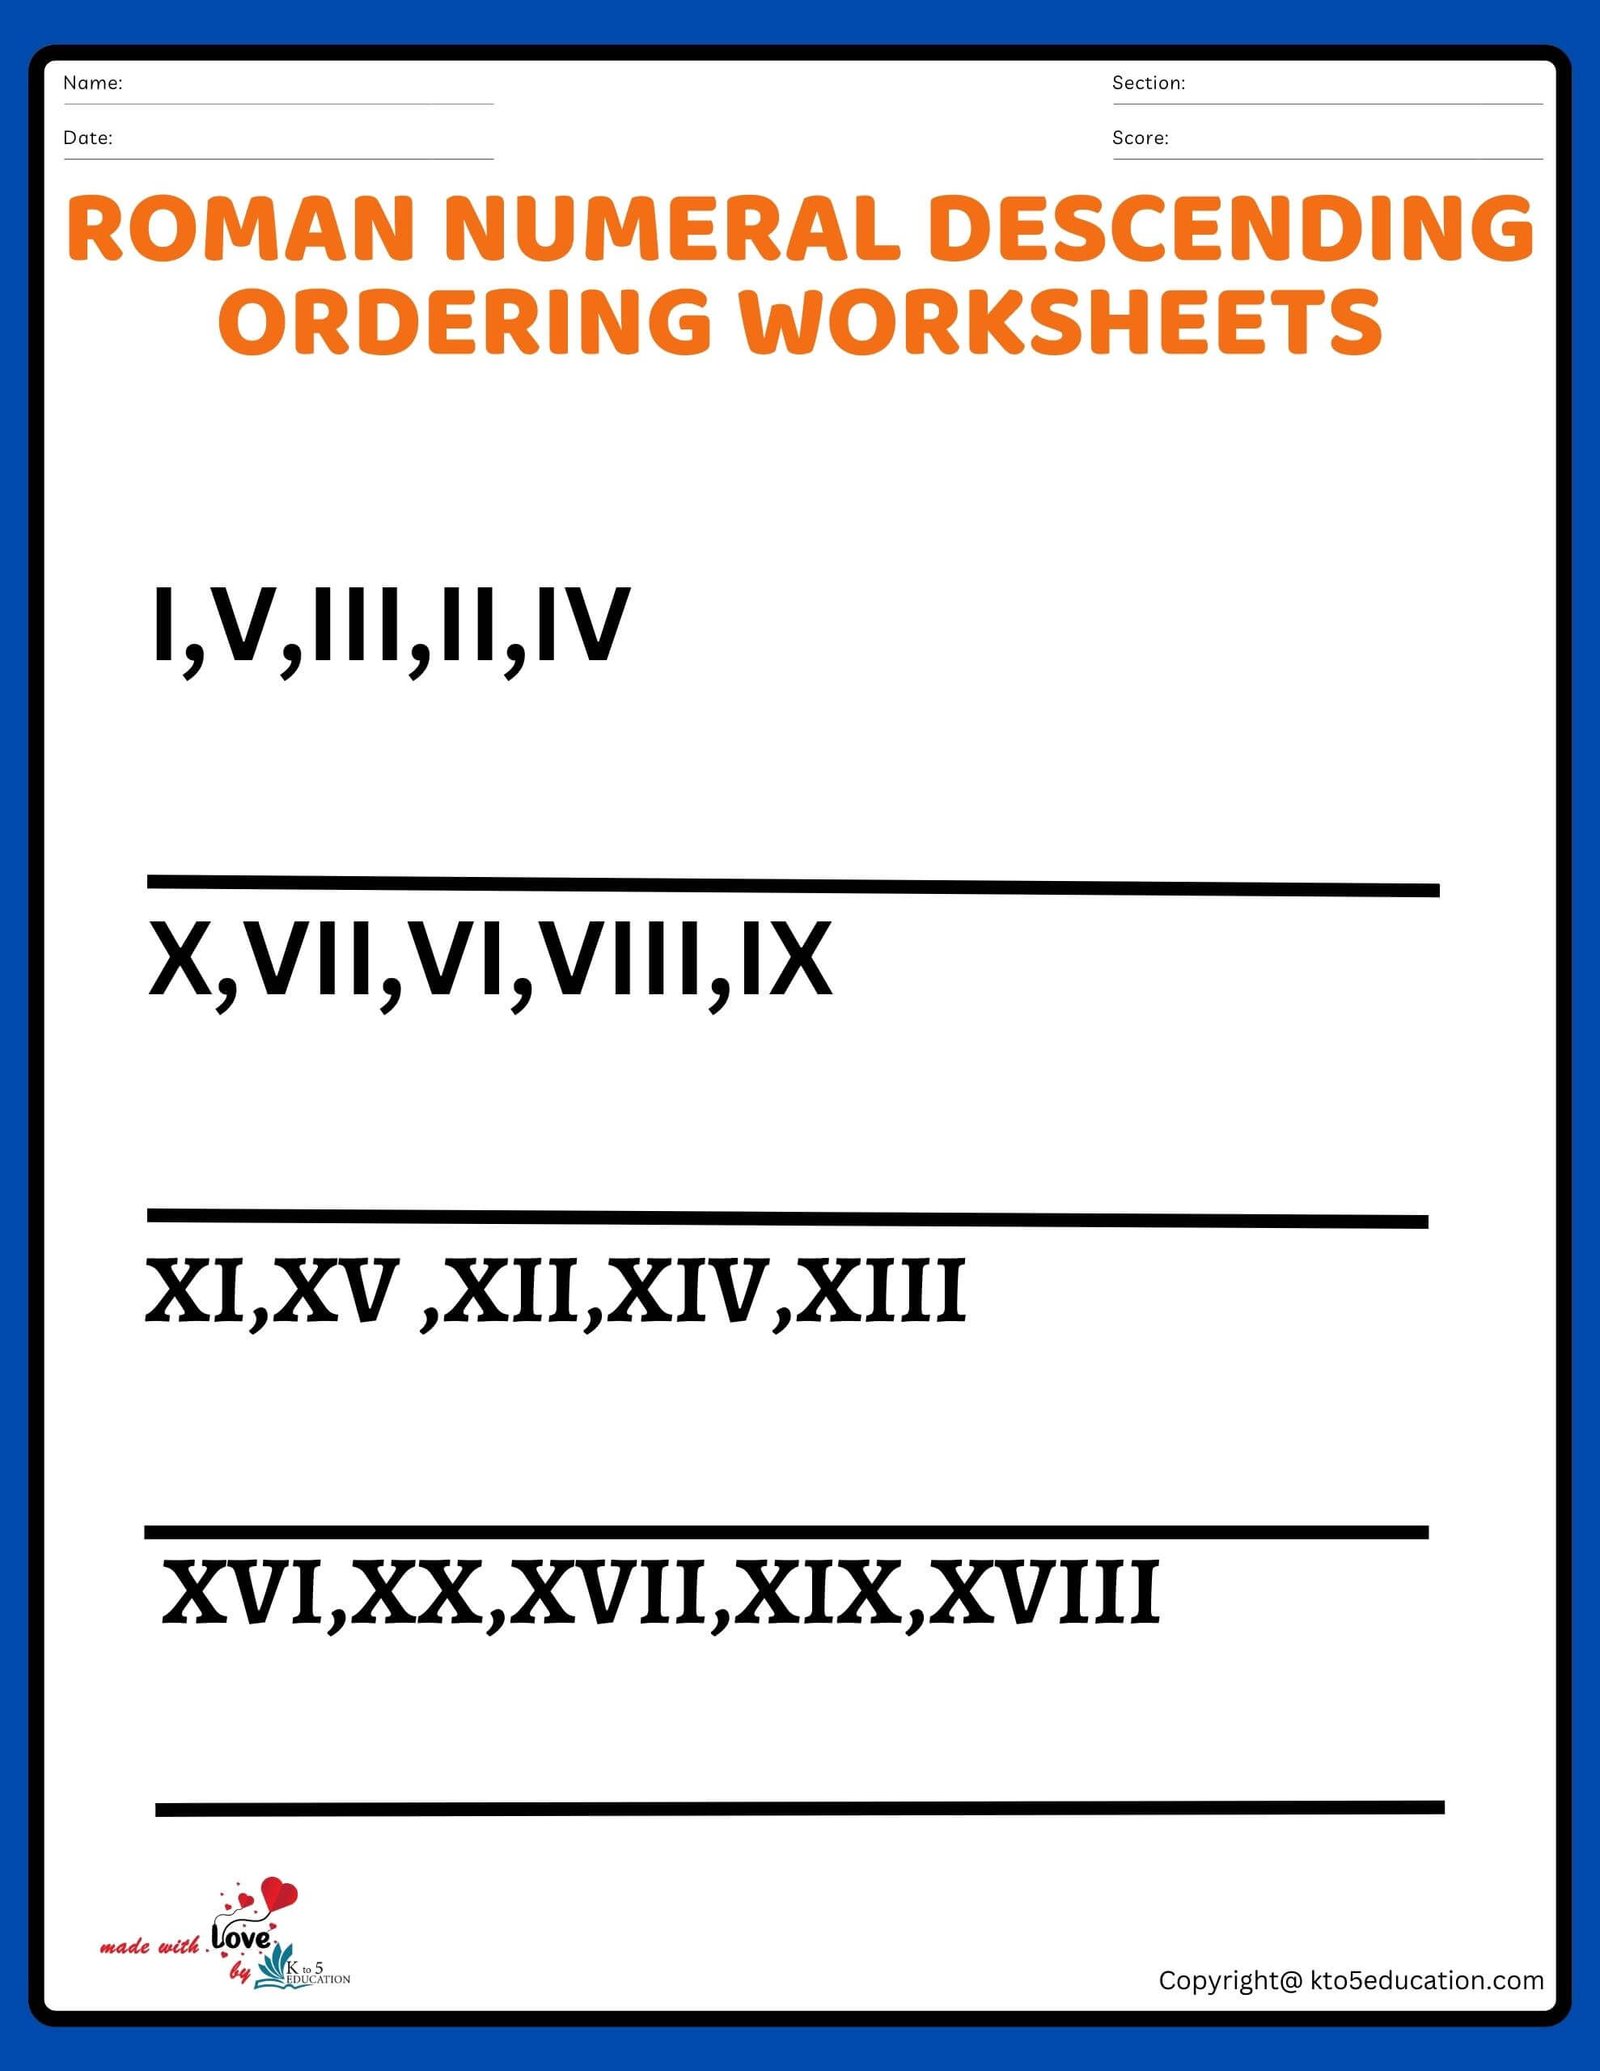 Roman Numeral Descending Ordering Worksheets For Grade 3